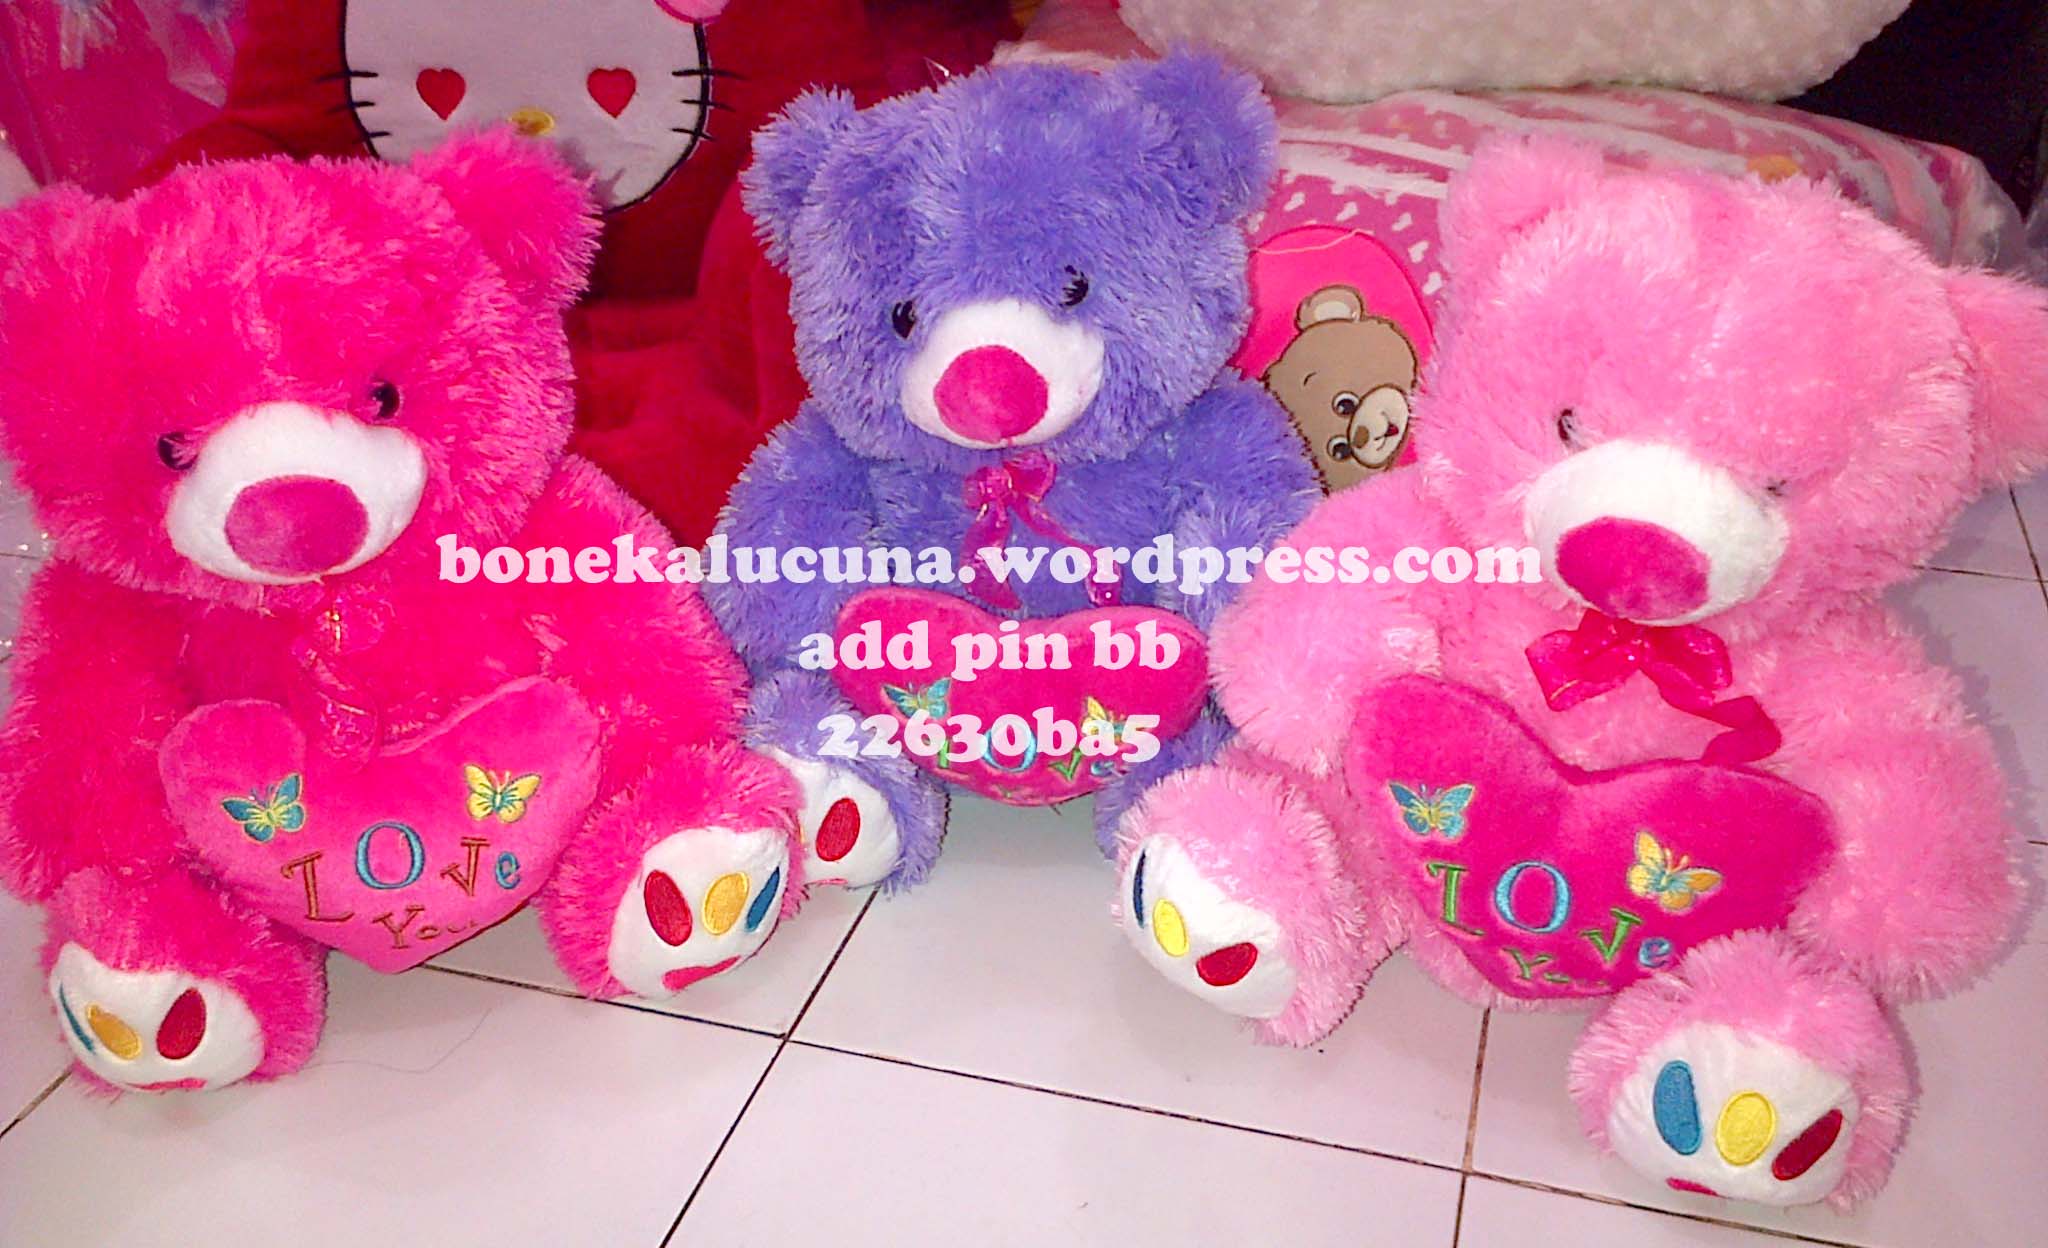 Boneka Beruang Love Boneka Lucu Toko Boneka Online Jual Boneka